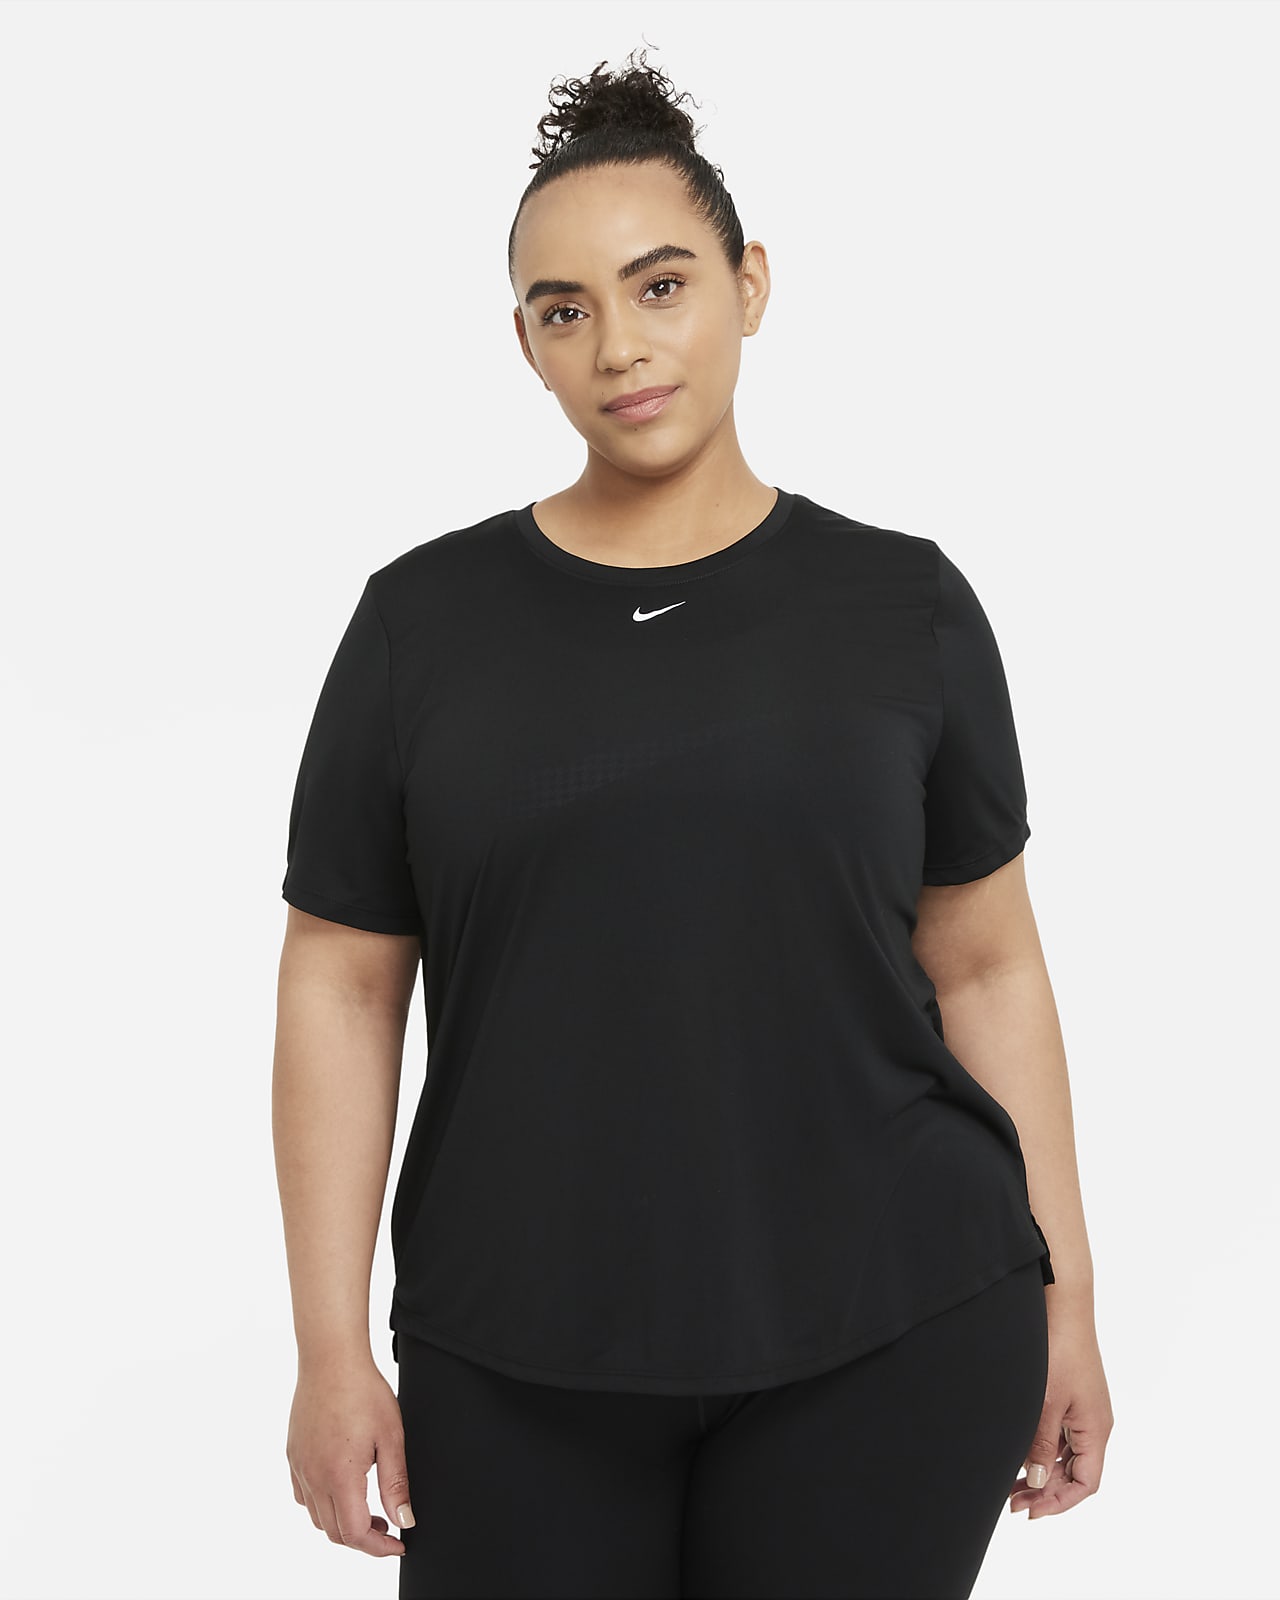 Nike Dri-FIT One Women's Standard Fit Short-Sleeve Top (Plus Size)